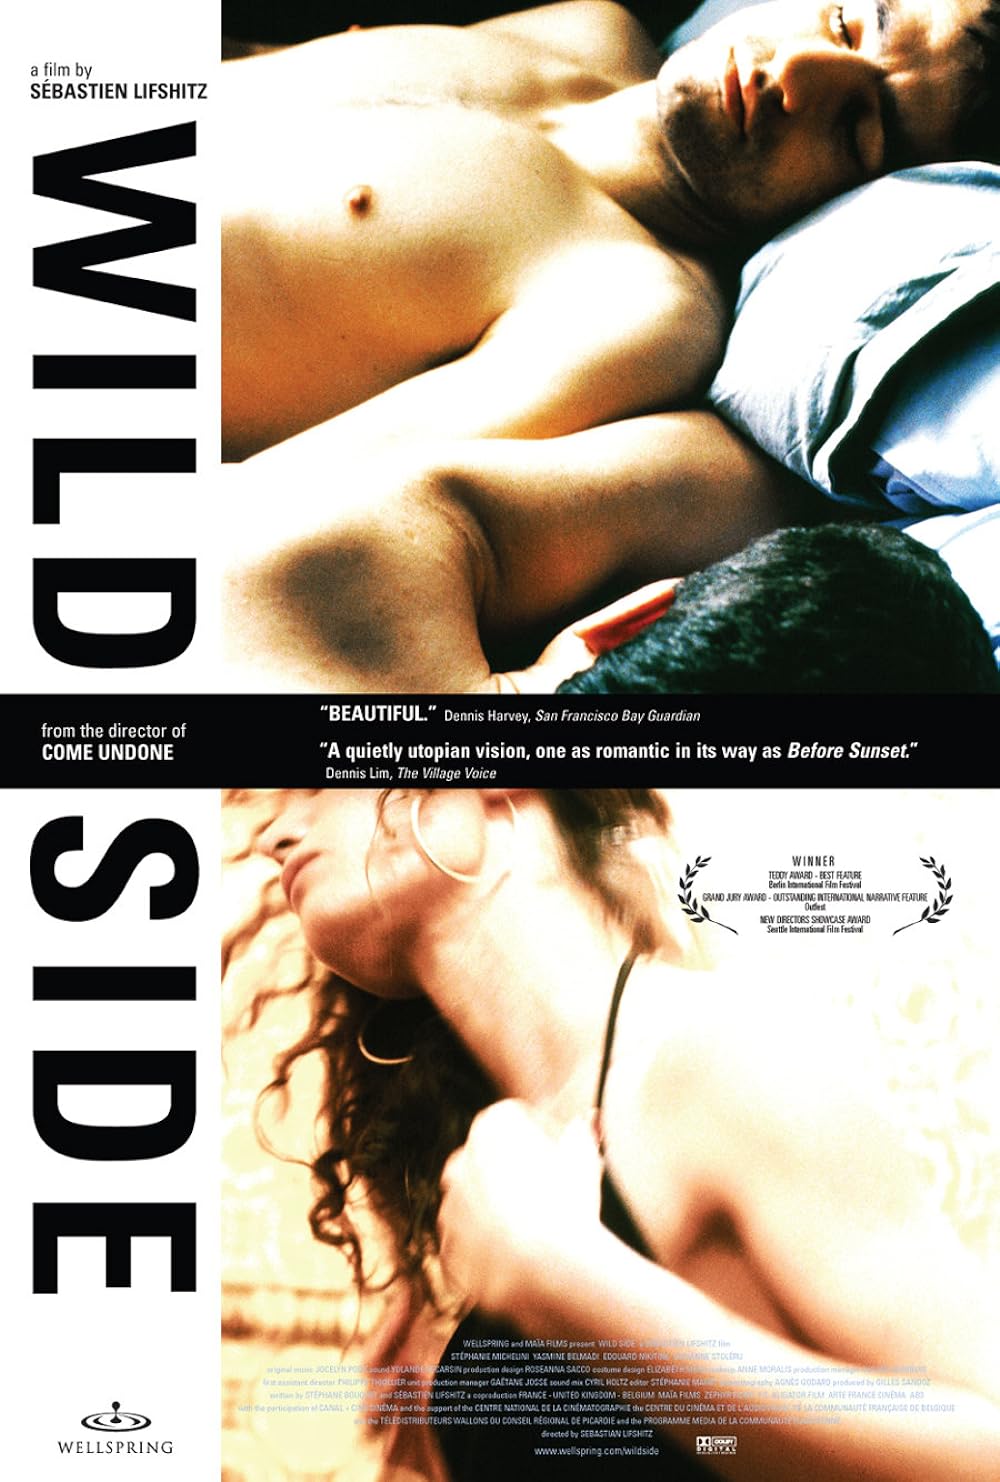 carol ackroyd recommends Wild Side Full Movie